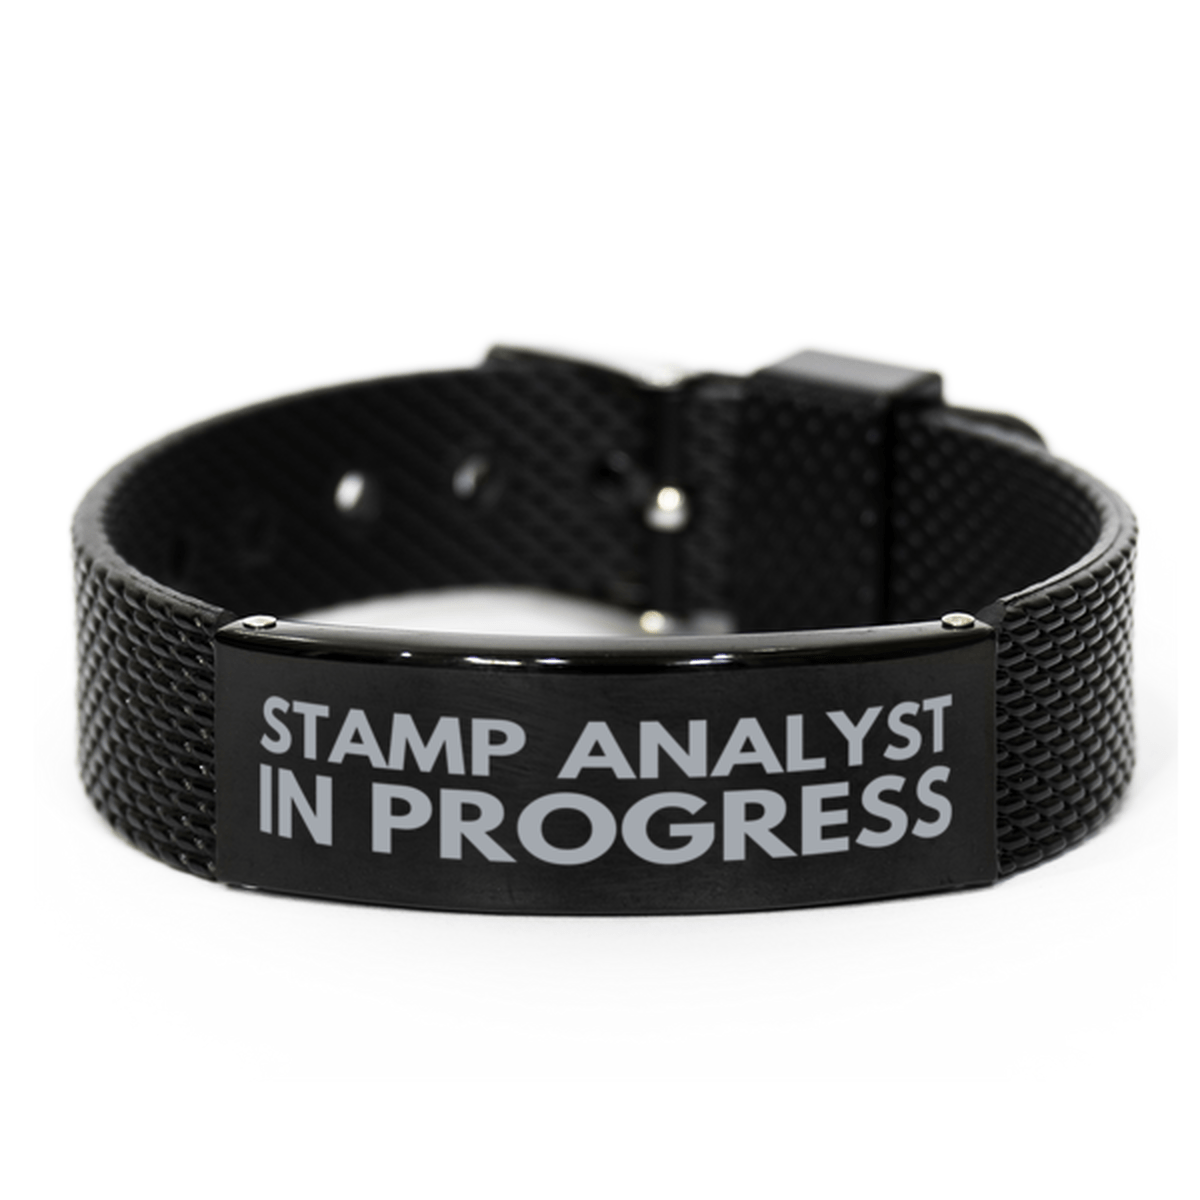 Inspirational Stamp Analyst Black Shark Mesh Bracelet, Stamp Analyst In Progress, Best Graduation Gifts for Students